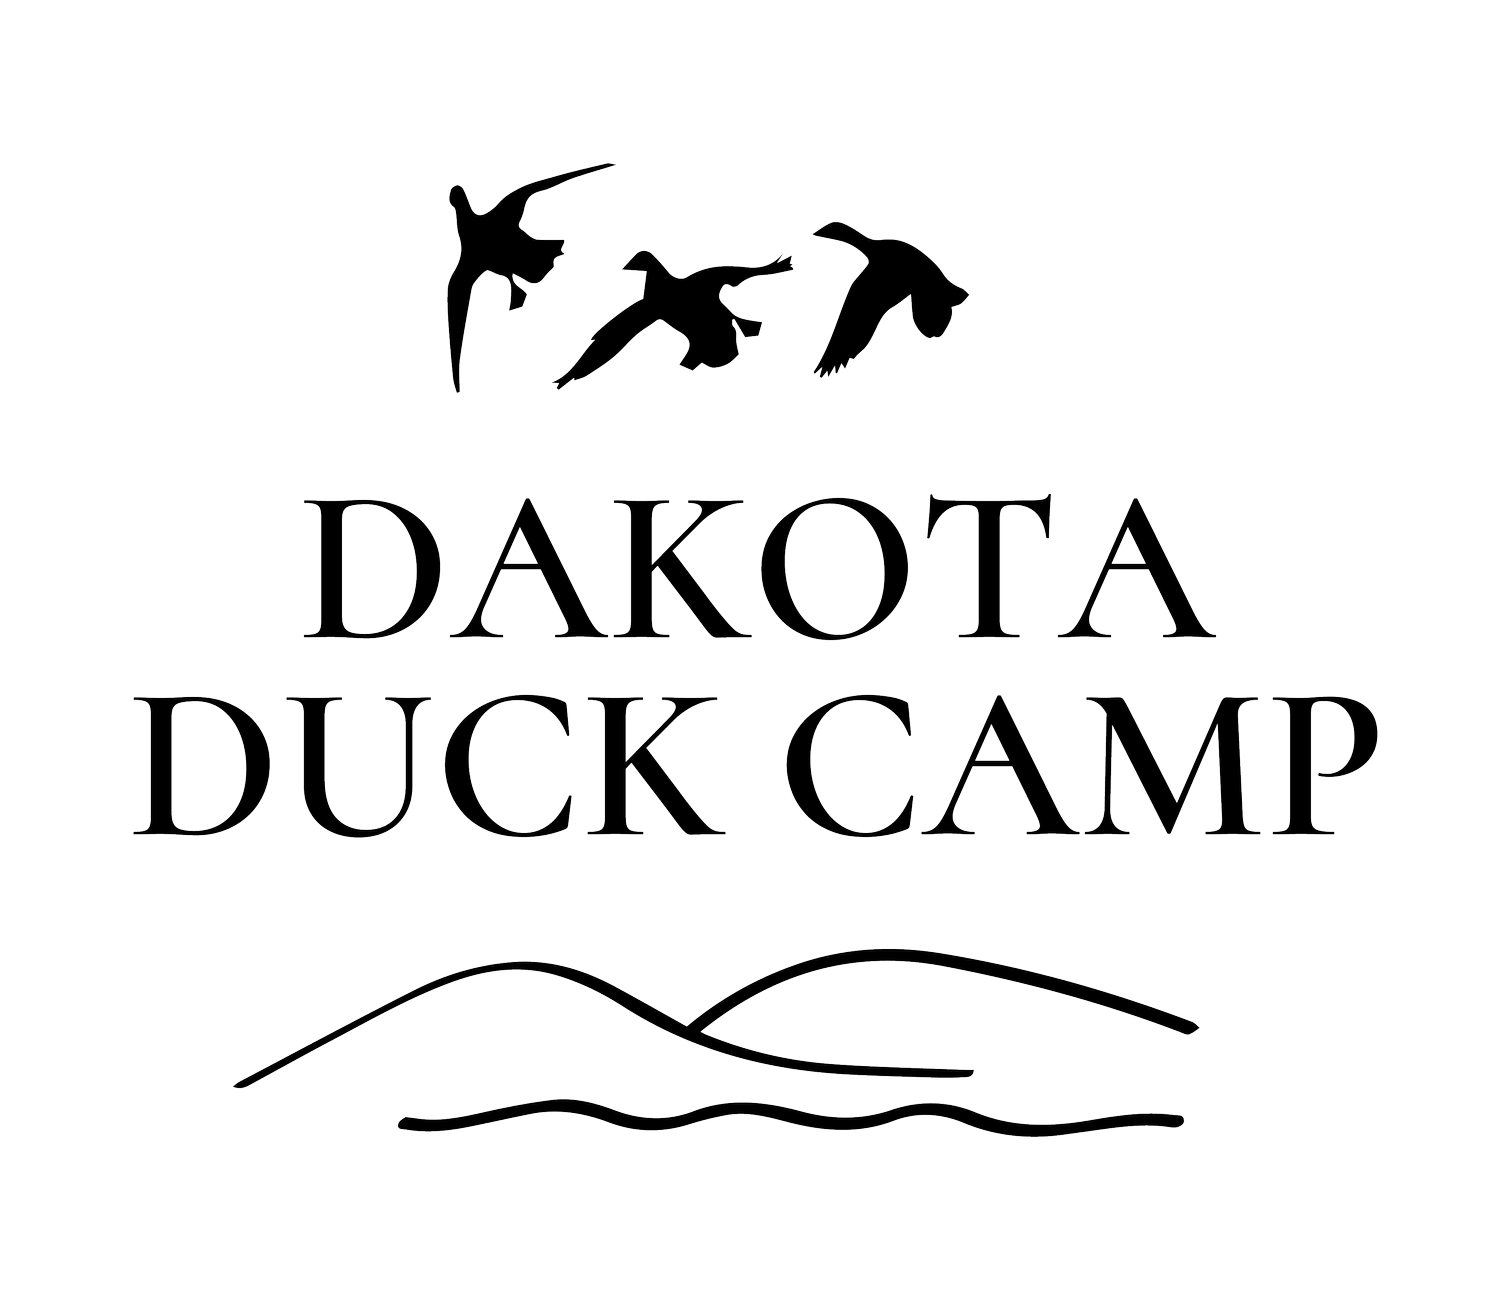 Dakota Duck Camp